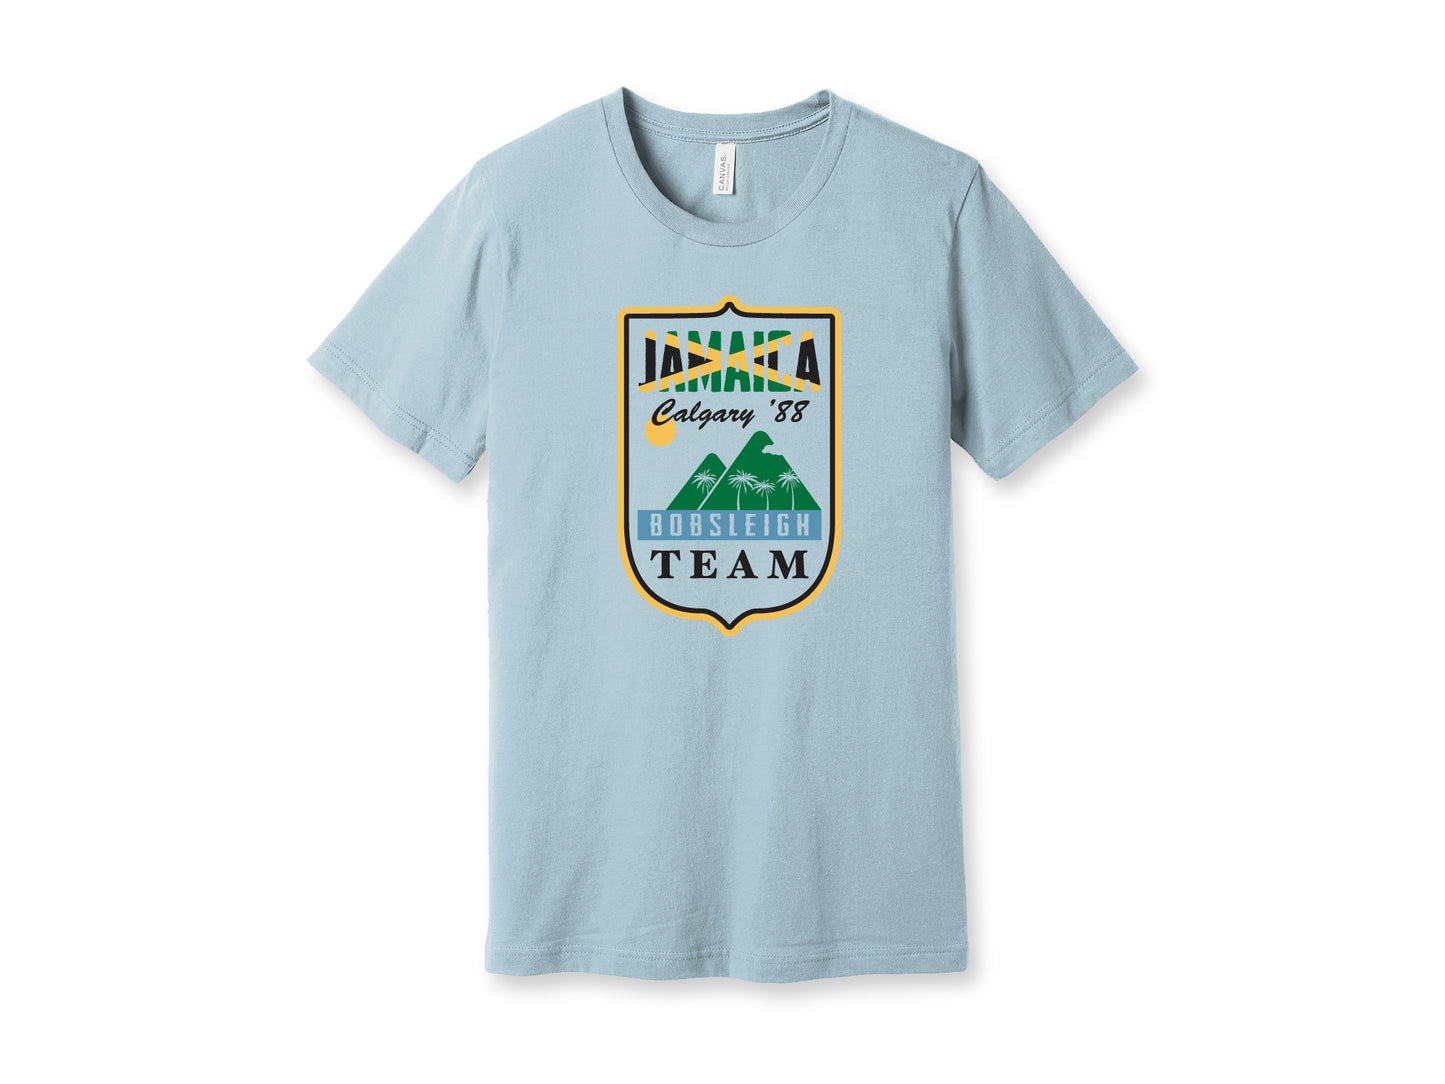 Cool Runnings Jamaica Bobsled Team 88' Calgary Olympics Vintage Shirt LIGHT BLUE